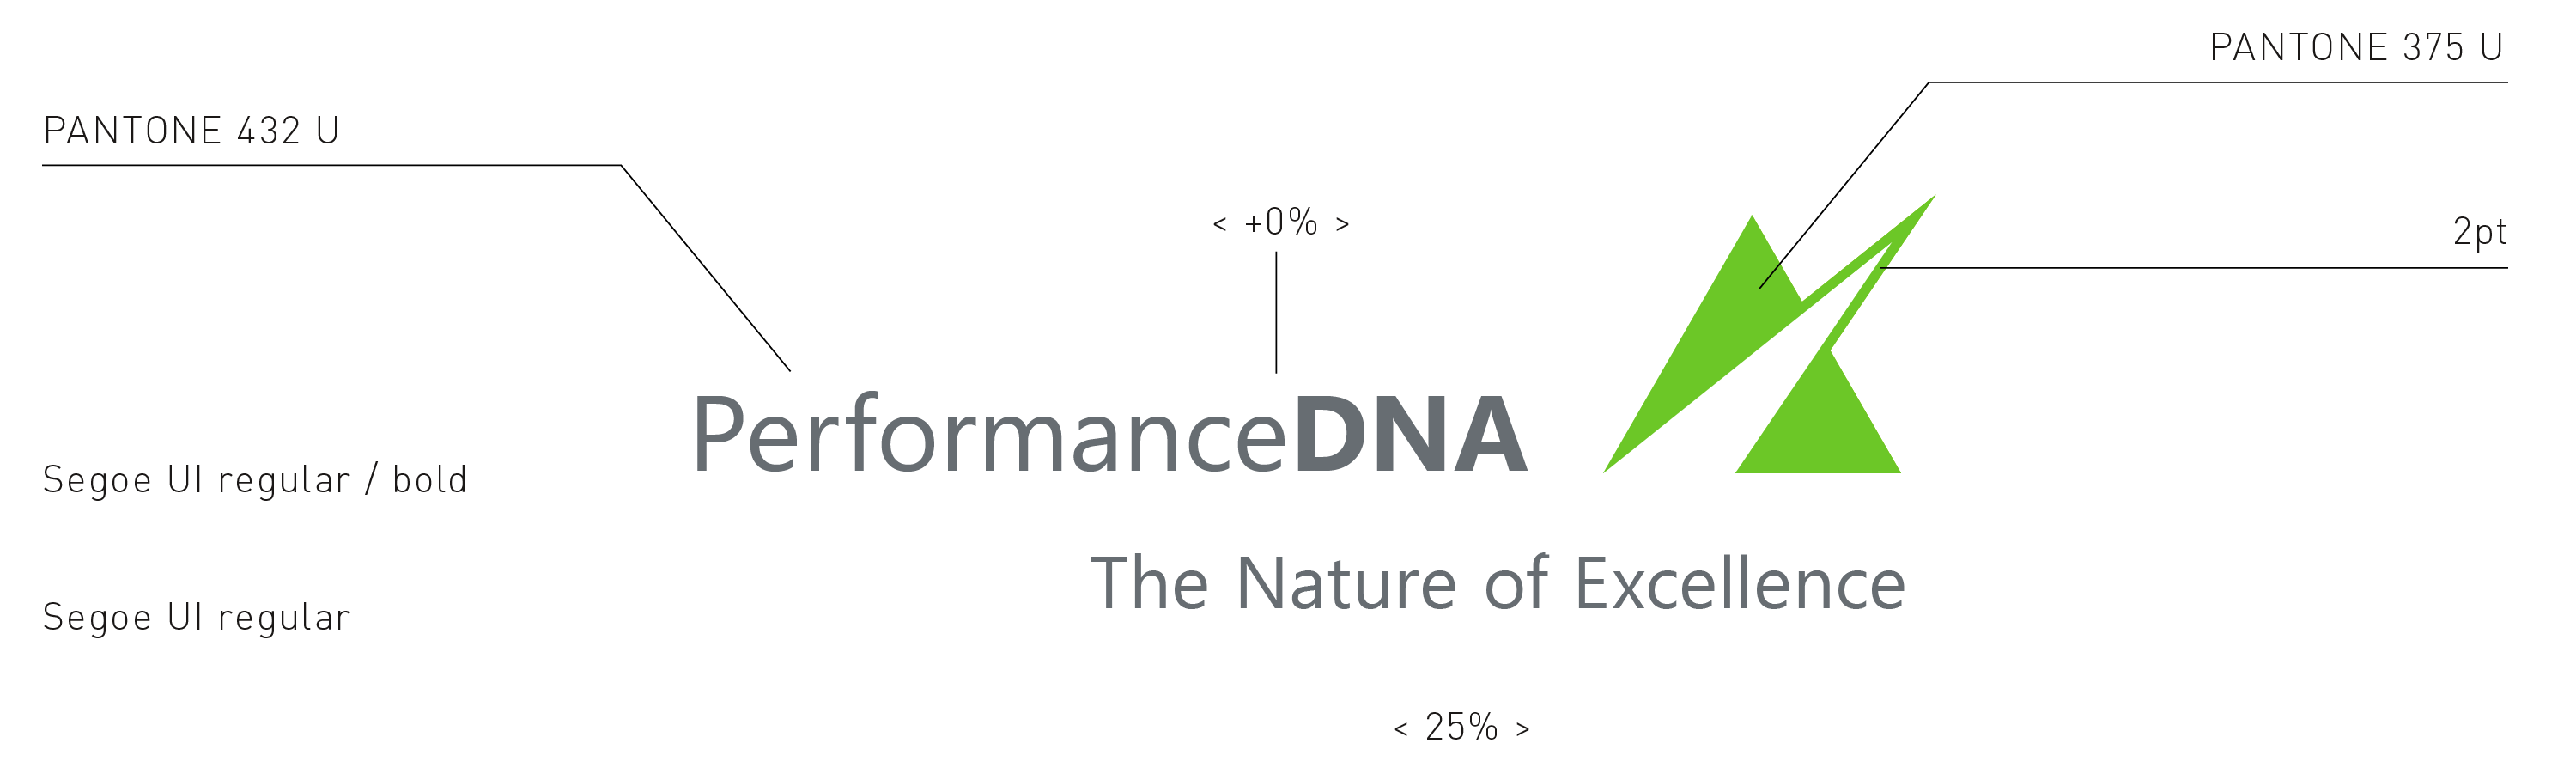 Corporate Design Guide for Performance DNA: DIE NEUDENKER® Agency, Darmstadt